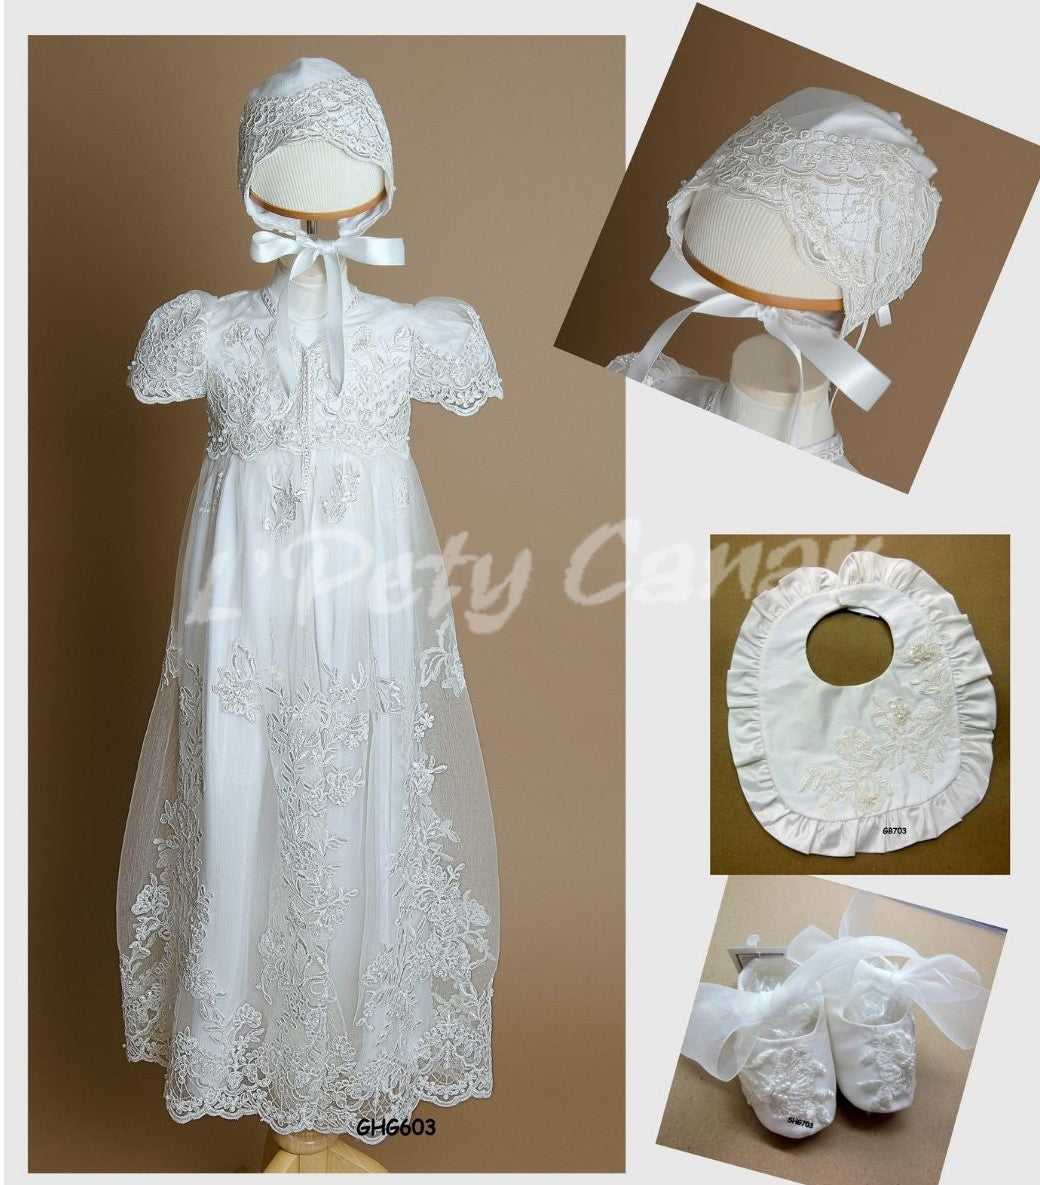 LPety Canar GHG603 Christening Gown